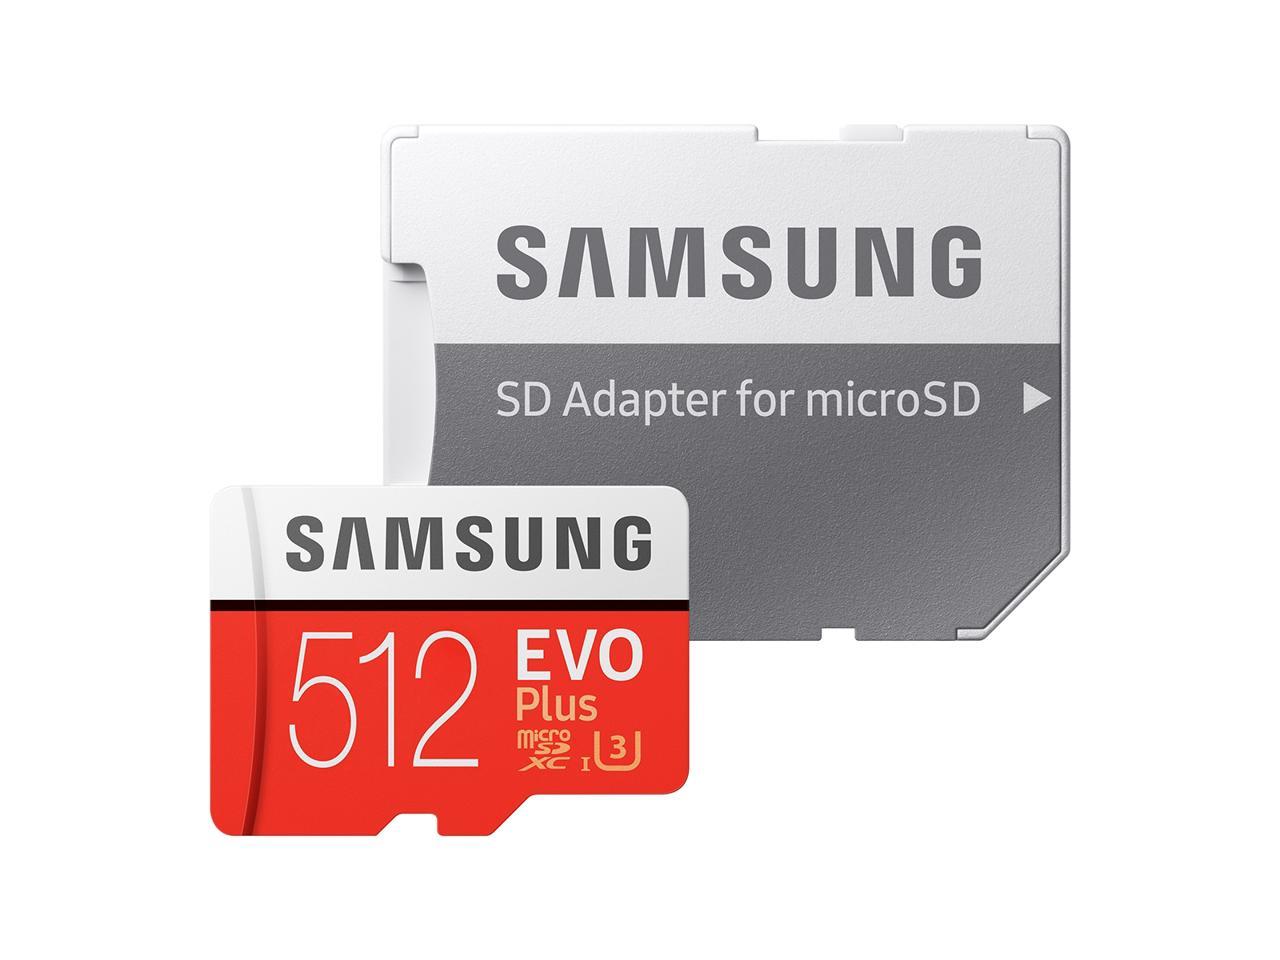 Samsung Evo Plus 32 Gb Microsdhc (Mb-Mc32Ga/Am)